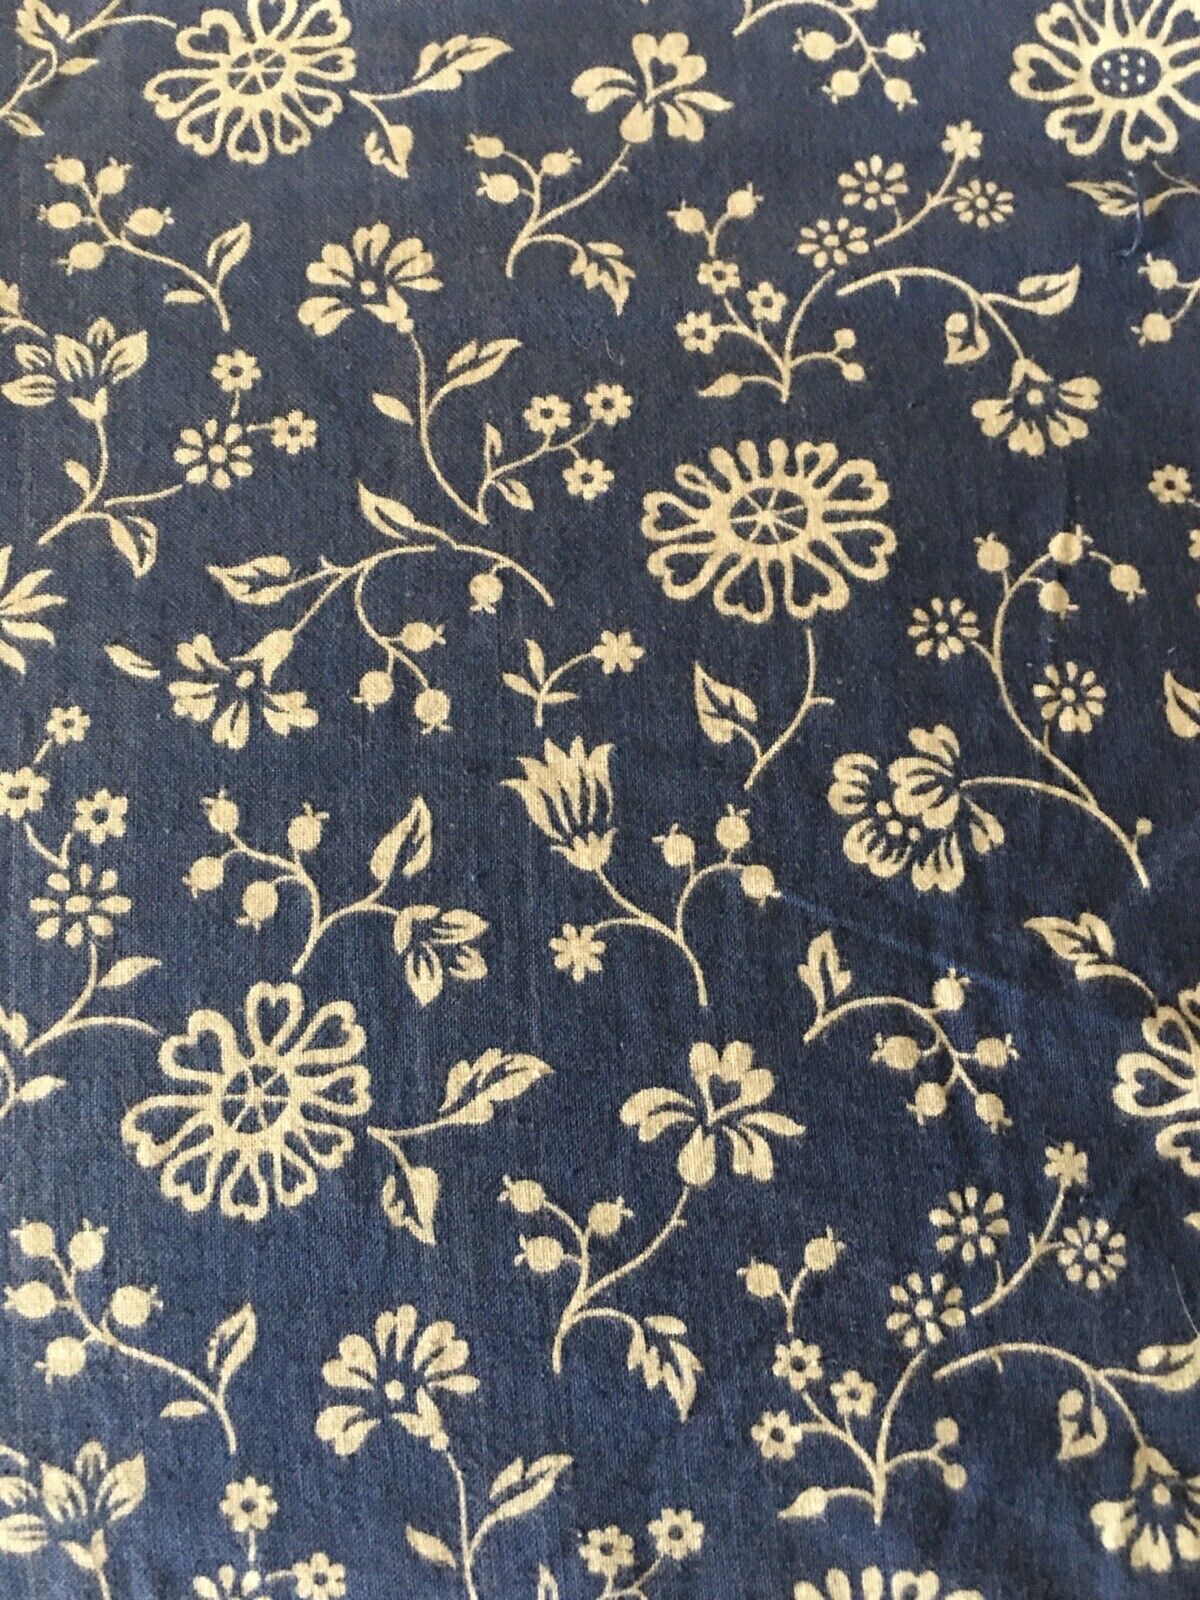 Beautiful Antique French Vining Floral Cotton Fabric ~ Unique Blue White ~